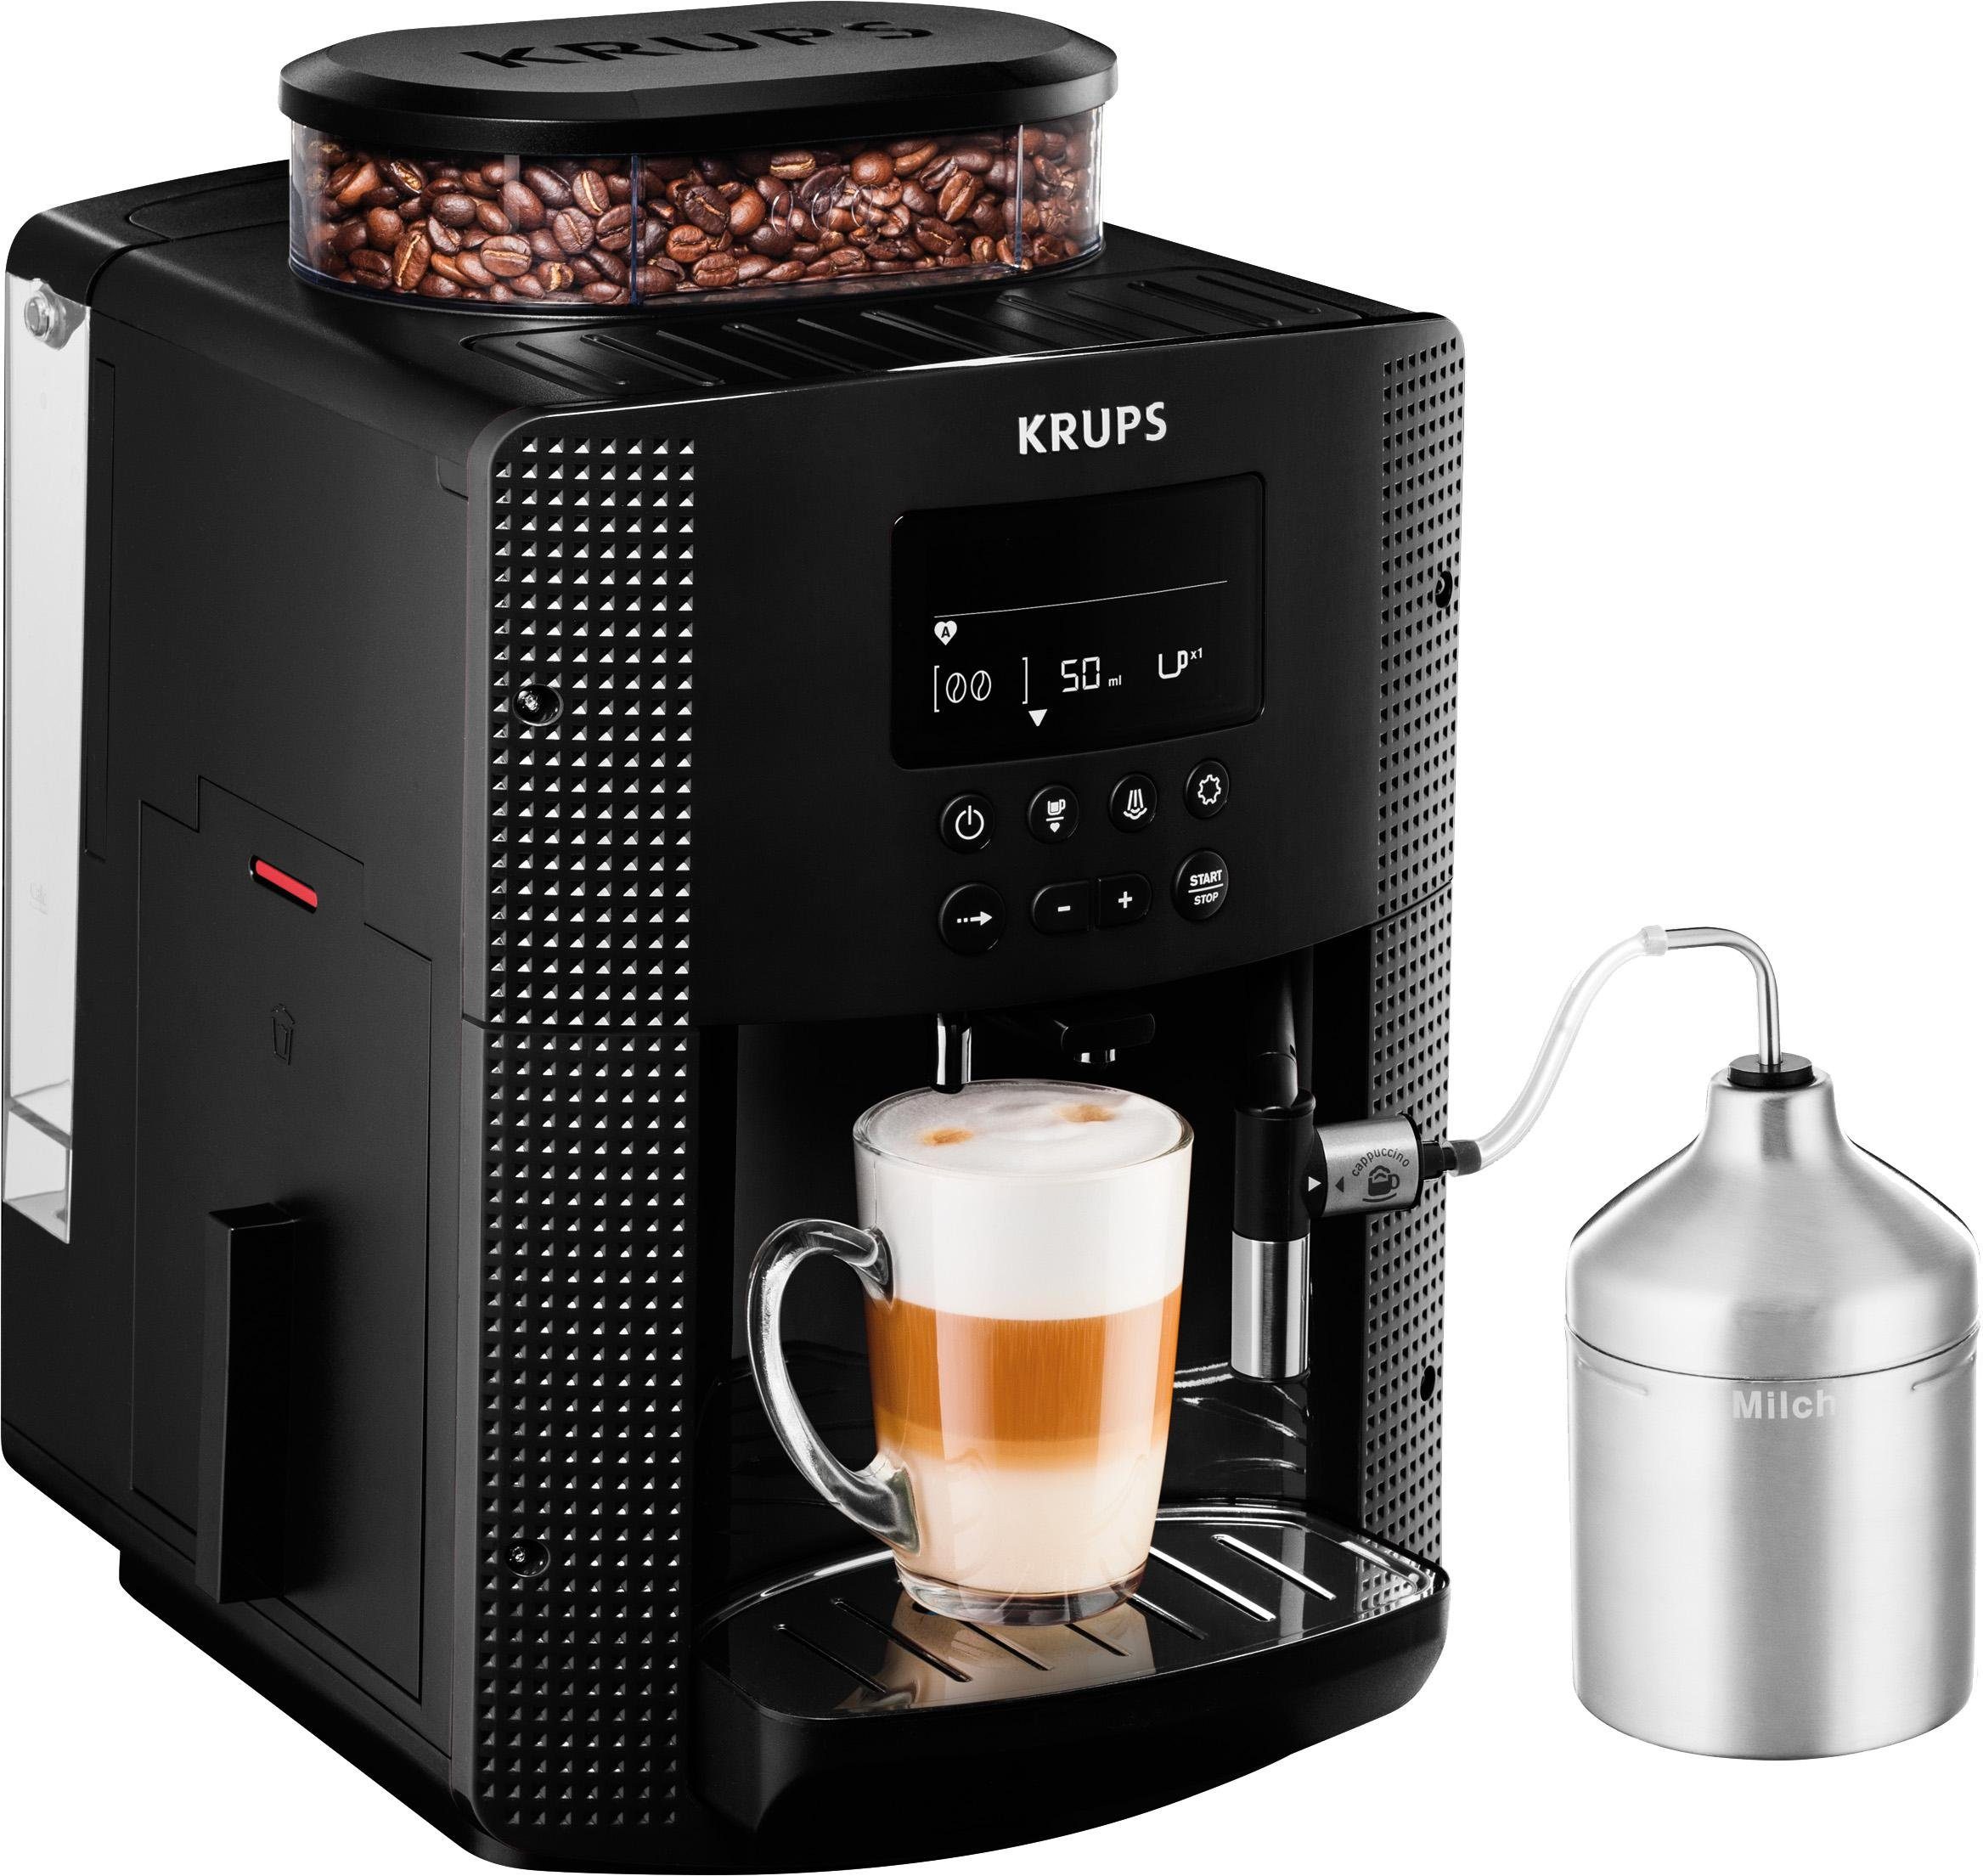 Nivona CafeRomatica NICR 690 Mattschwarz/Chrom Kaffeevollautomat, 629,99 €